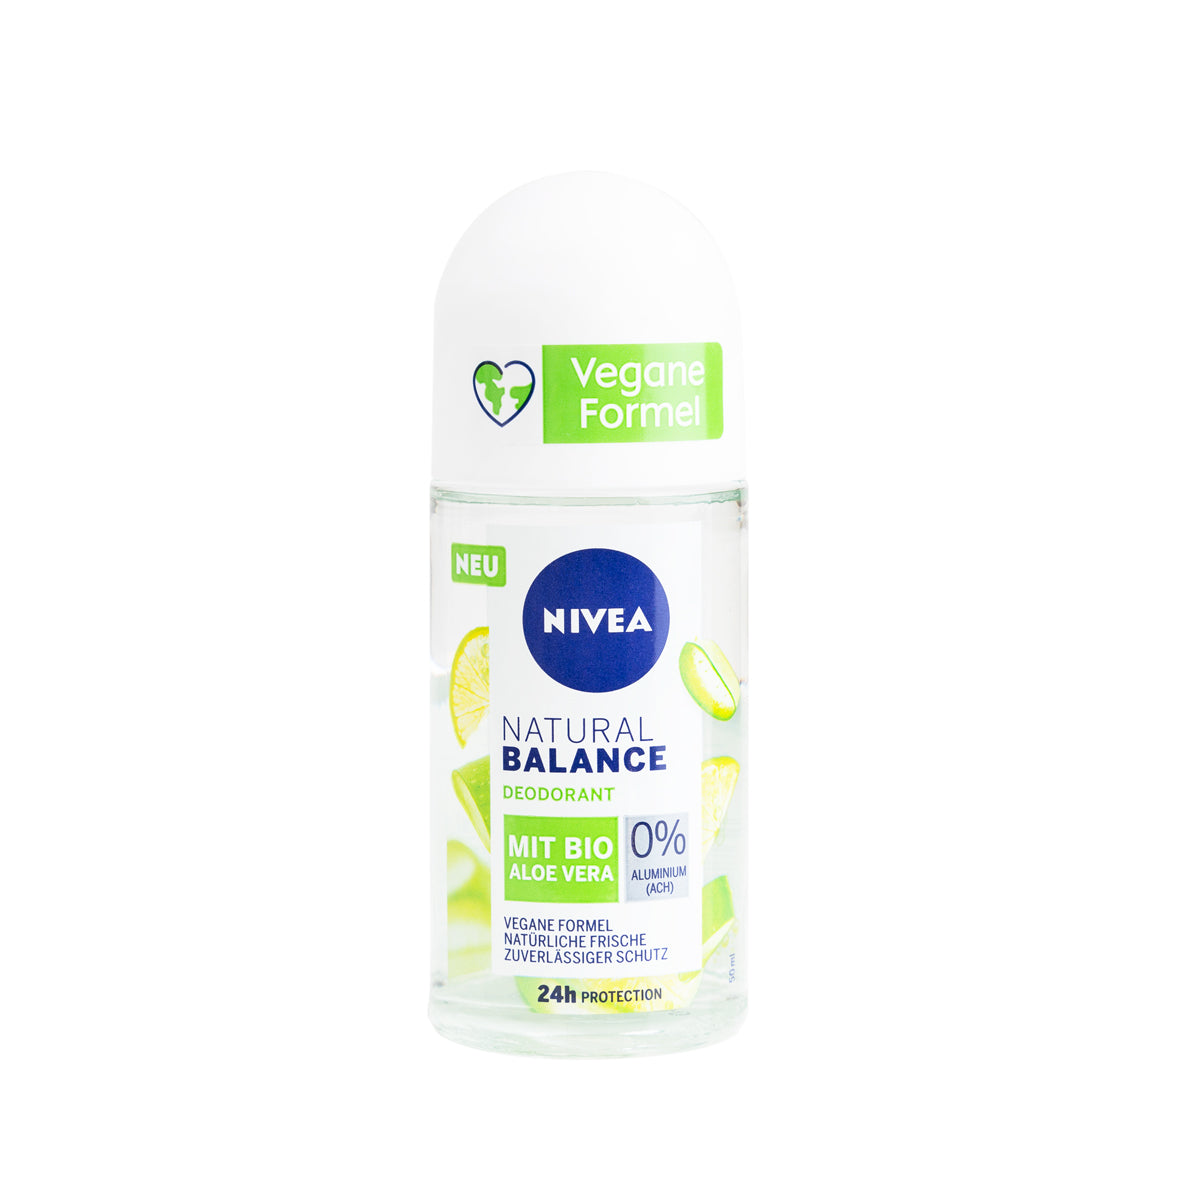 Primary image of Natural Balance Aloe Vera Roll-On Deodorant